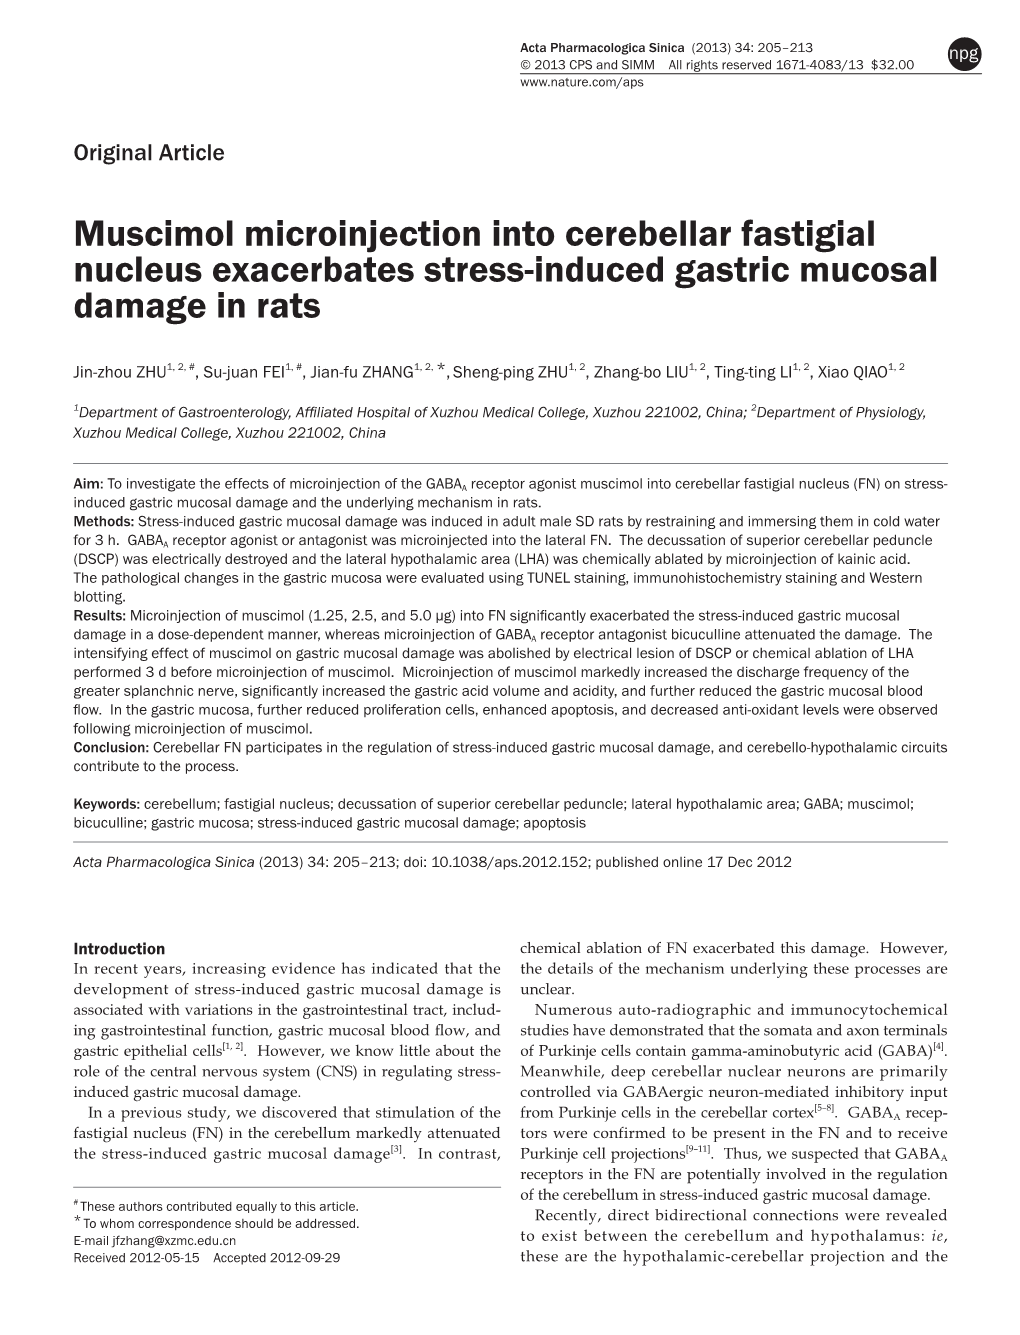 Muscimol Microinjection Into Cerebellar Fastigial Nucleus Exacerbates Stress-Induced Gastric Mucosal Damage in Rats